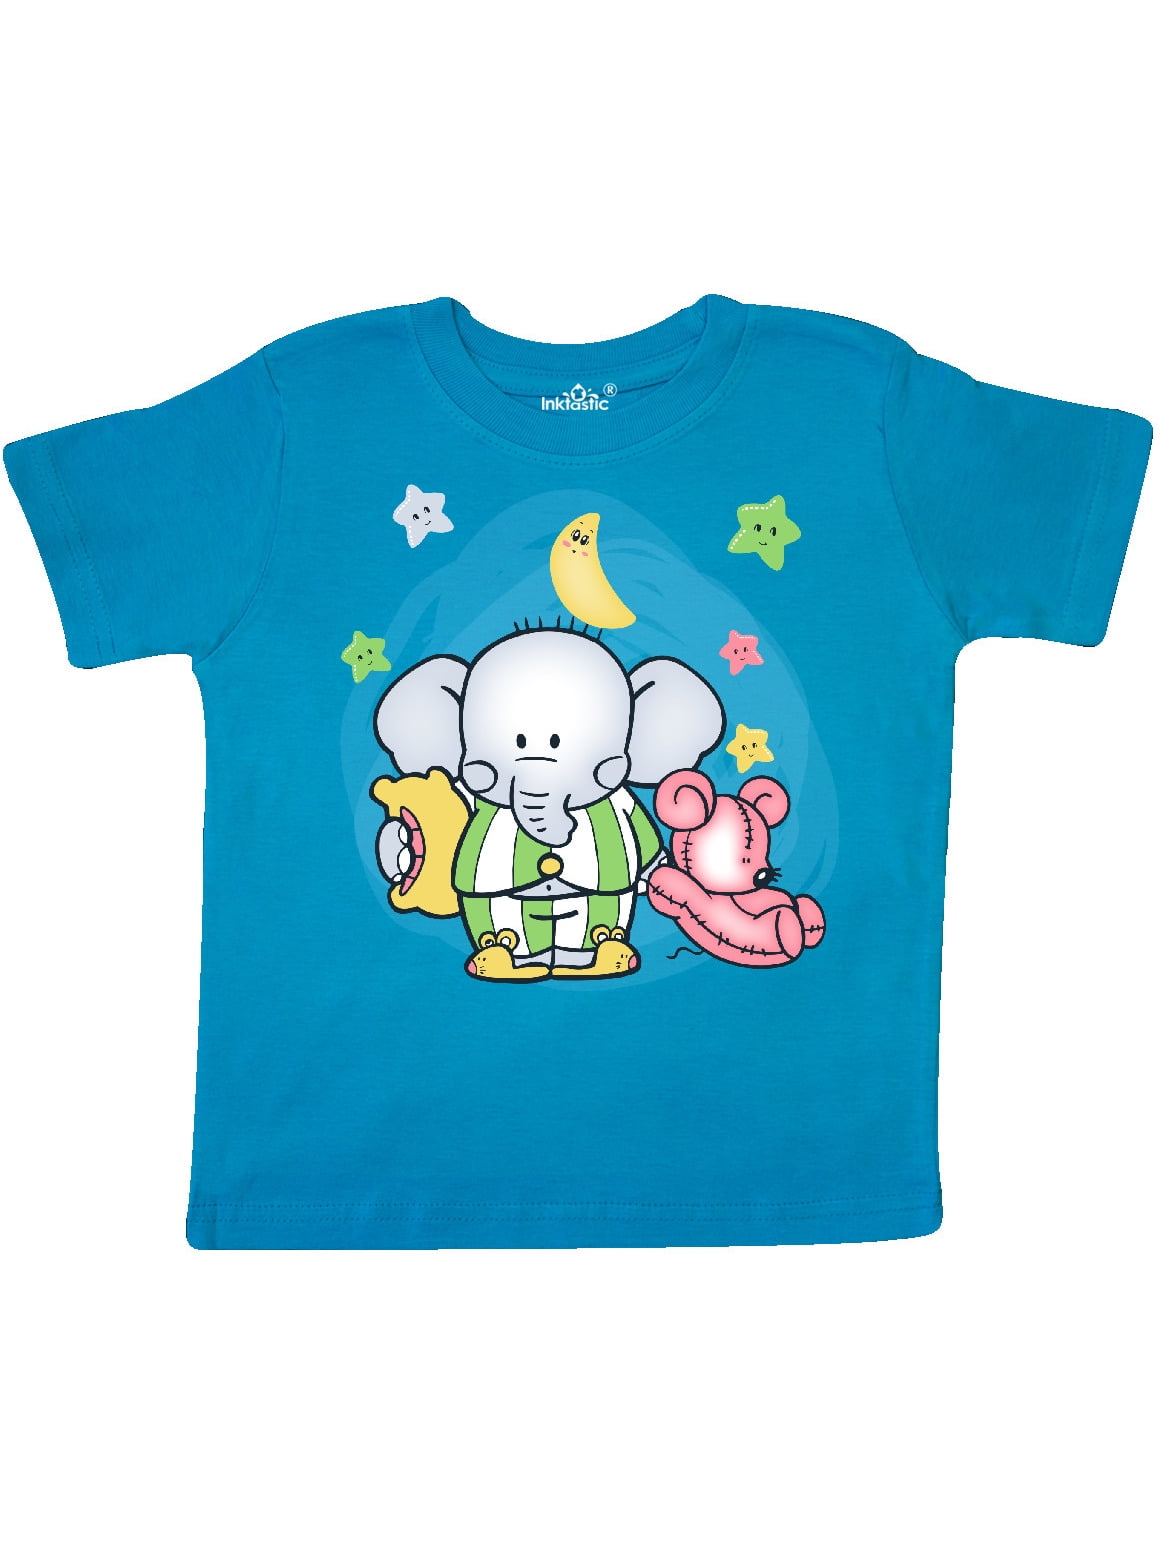 INKtastic - Elephant Pajamas Toddler T-Shirt - Walmart.com ...